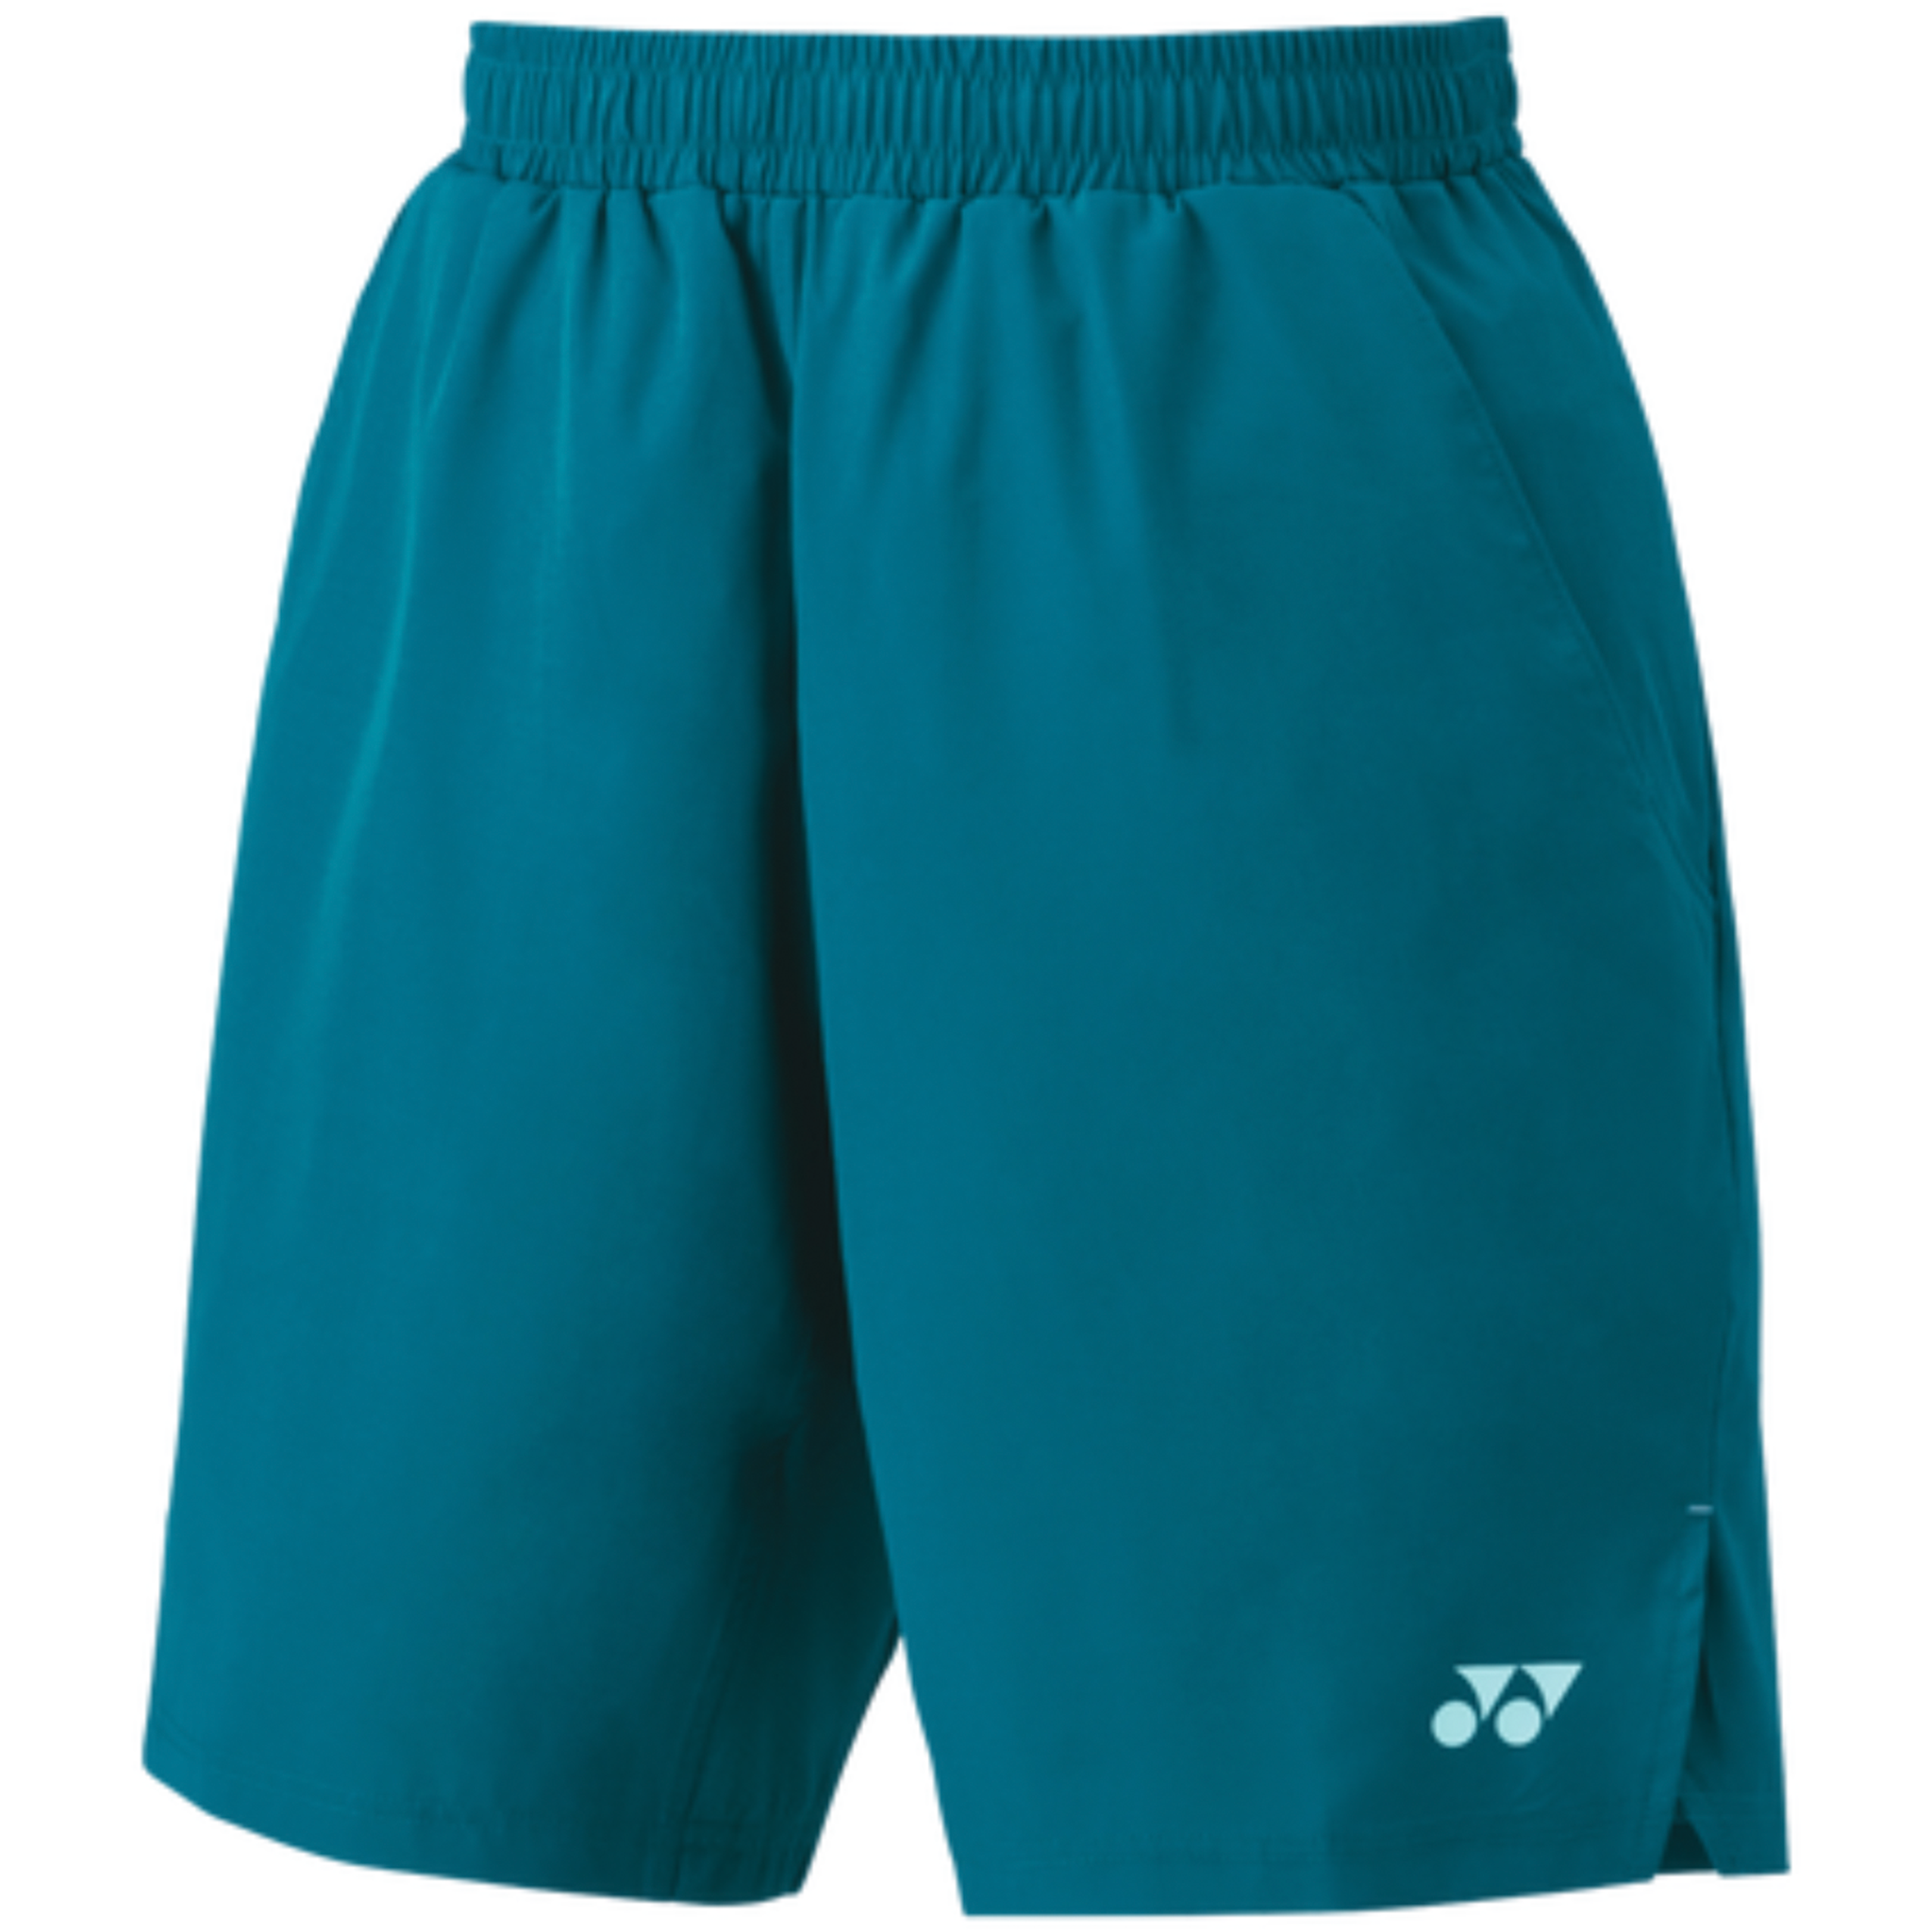 Yonex  Men's Shorts - Blue/Green